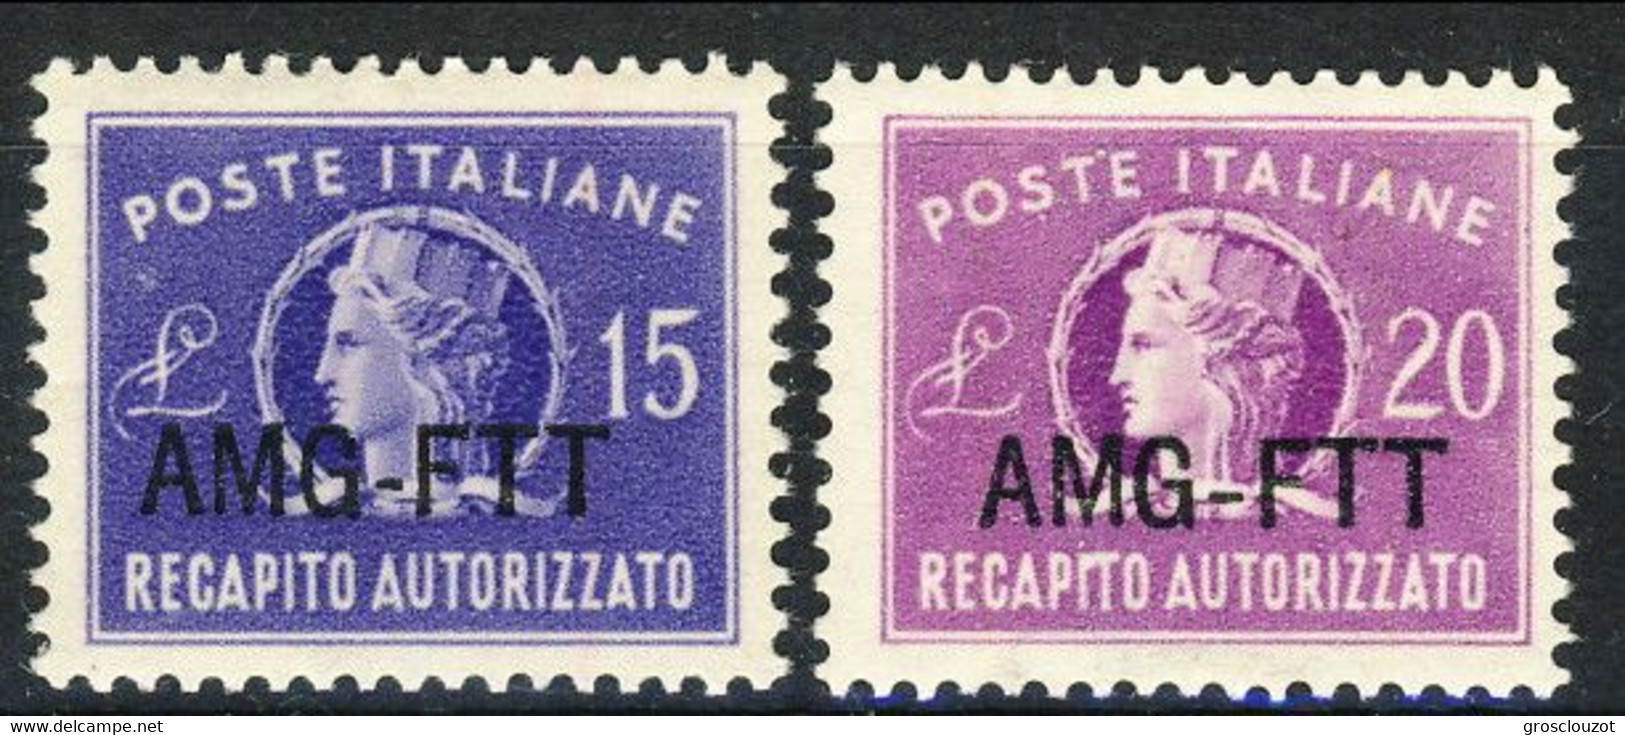 Trieste 1949-52 Recapito Autorizzato Sass. N. 4 - 5 MNH Cat. € 18 - Paquetes Postales/consigna